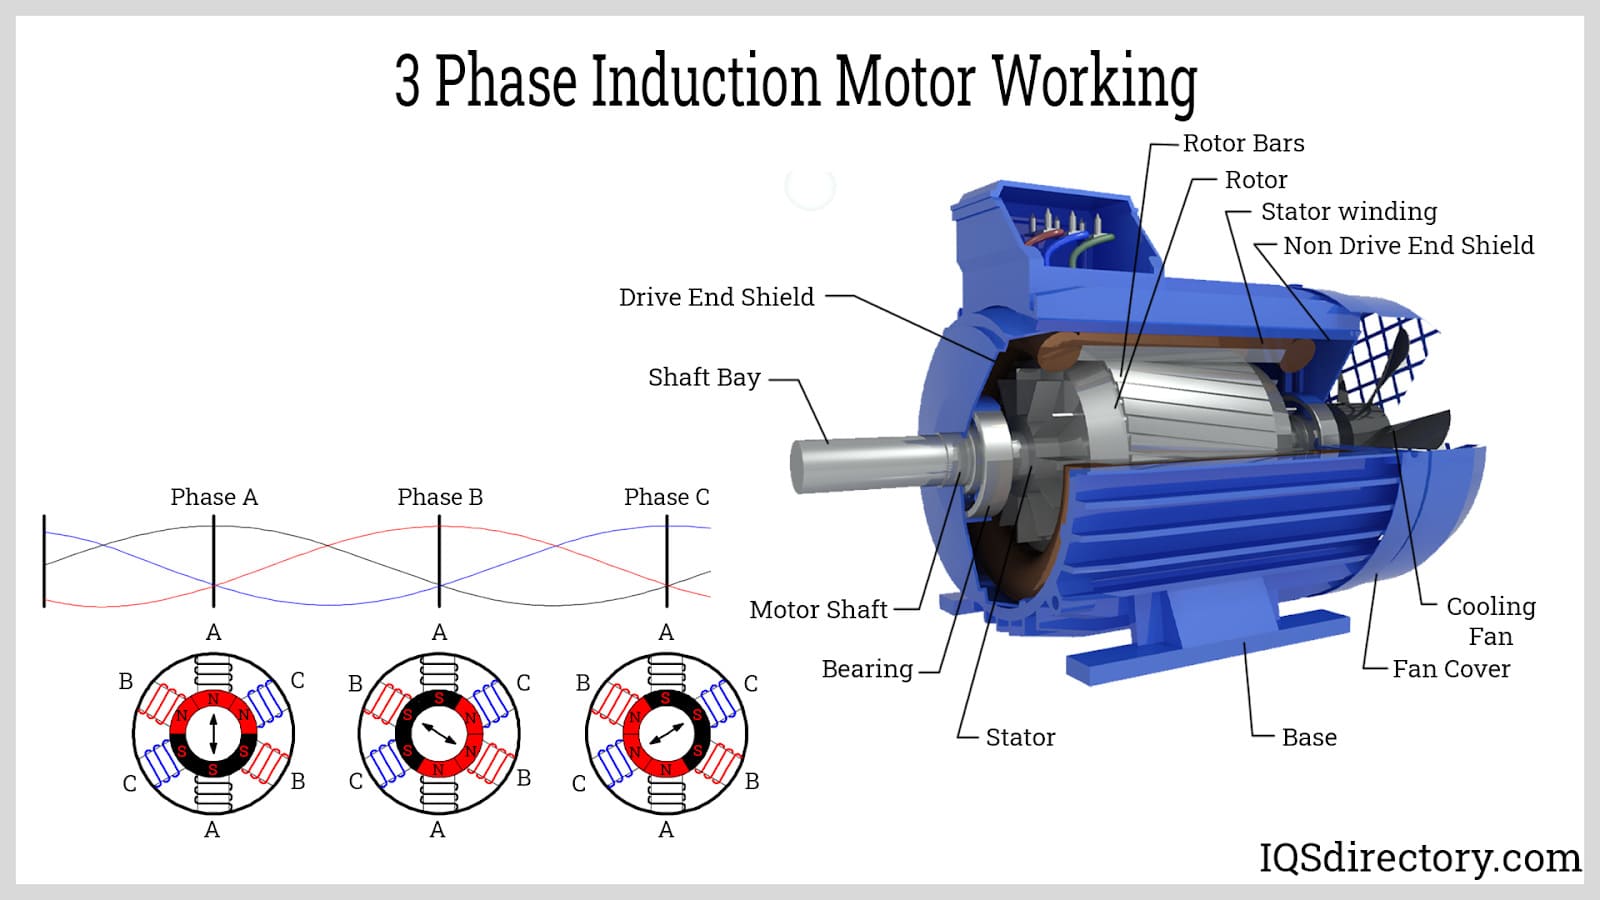 3 Phase Induction Motor Working